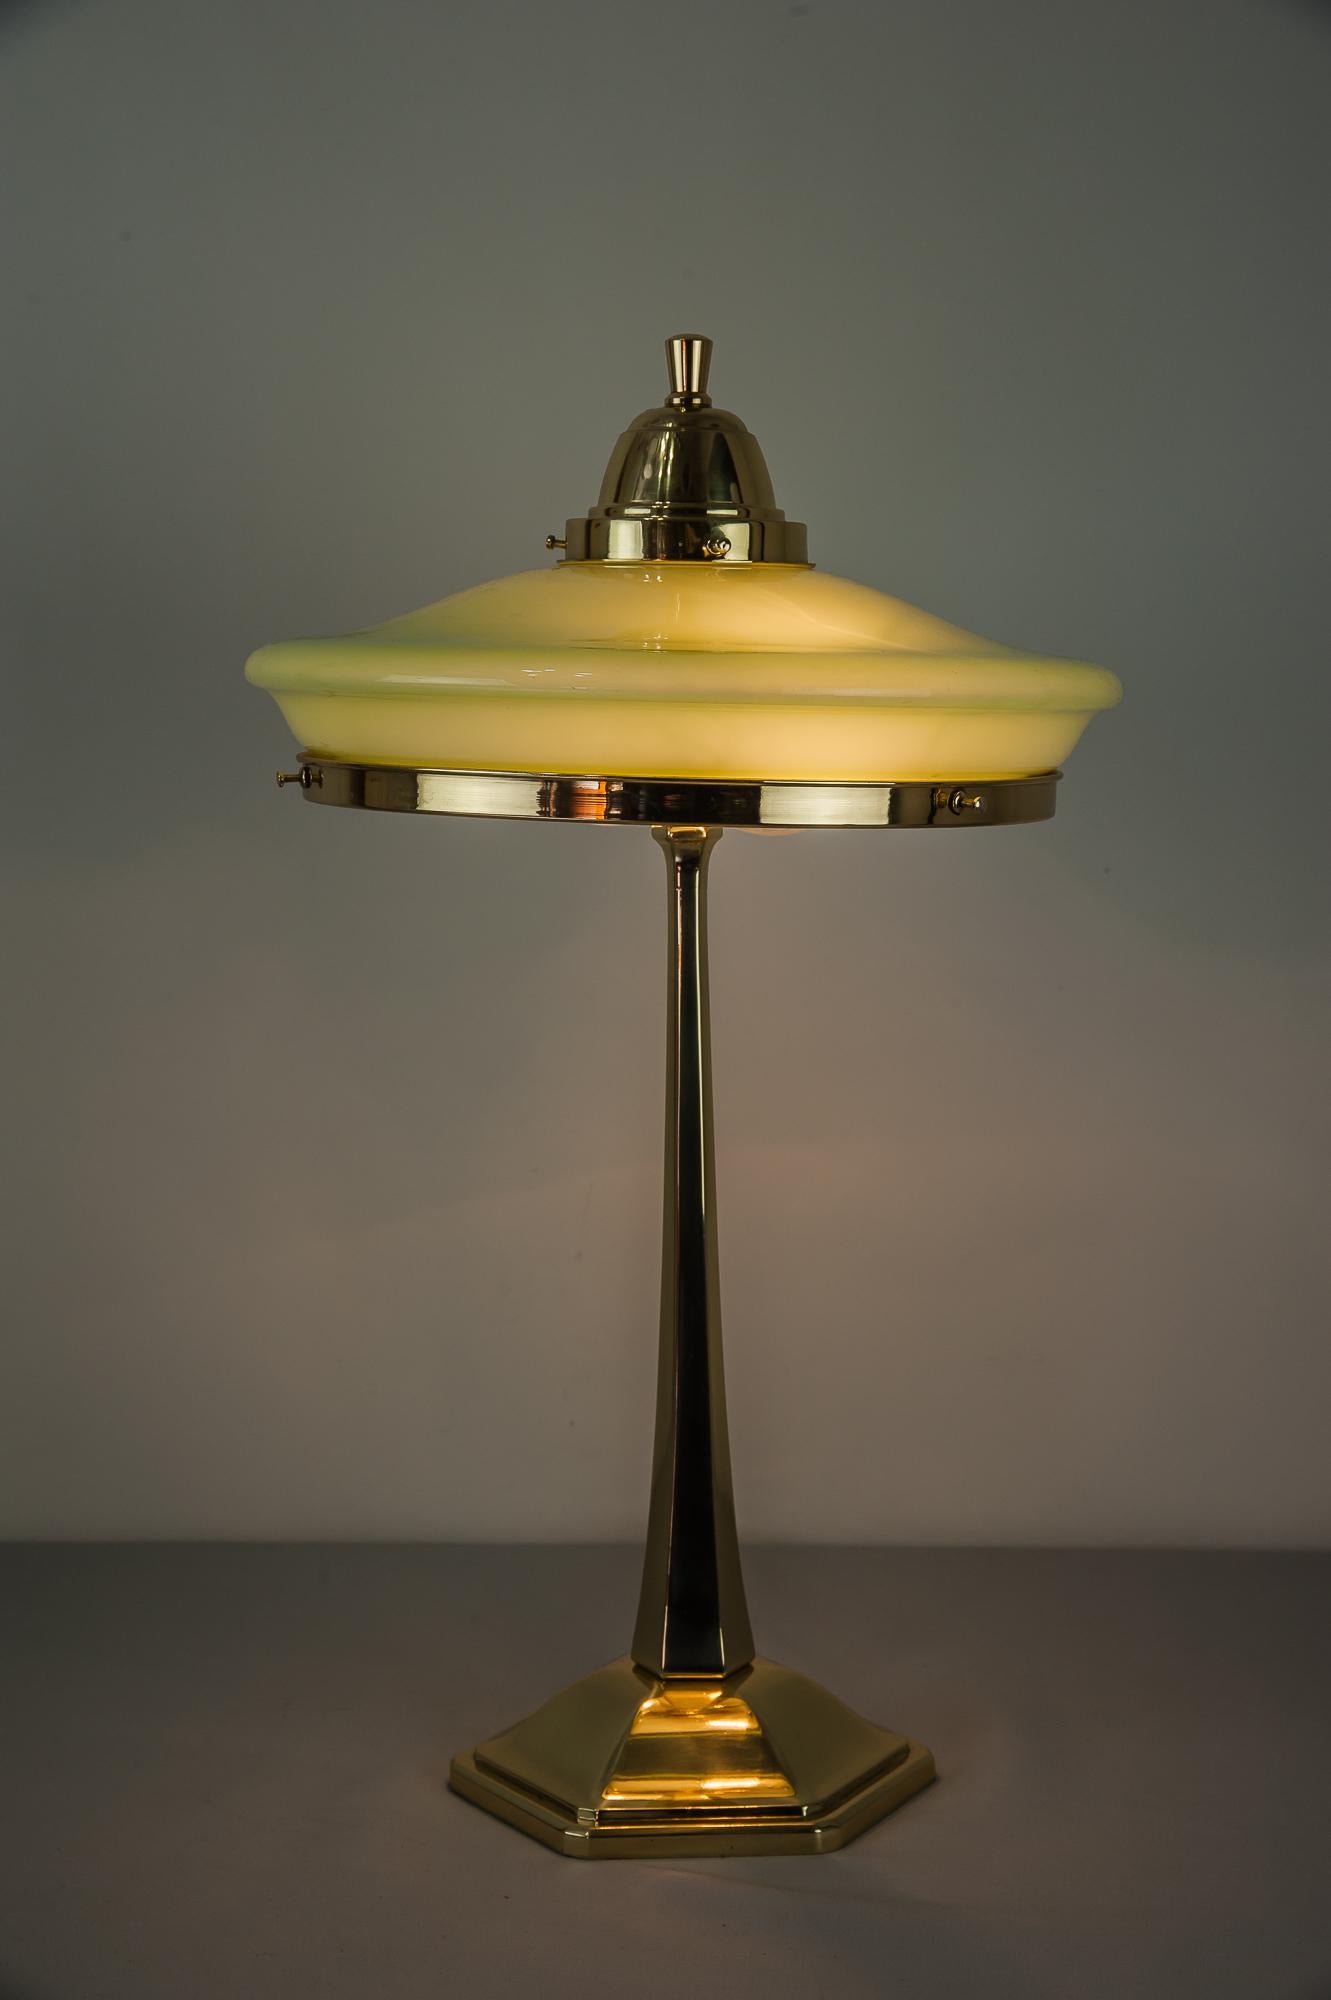 Jugendstil Table Lamp circa 1910s with Original Glass (Frühes 20. Jahrhundert)